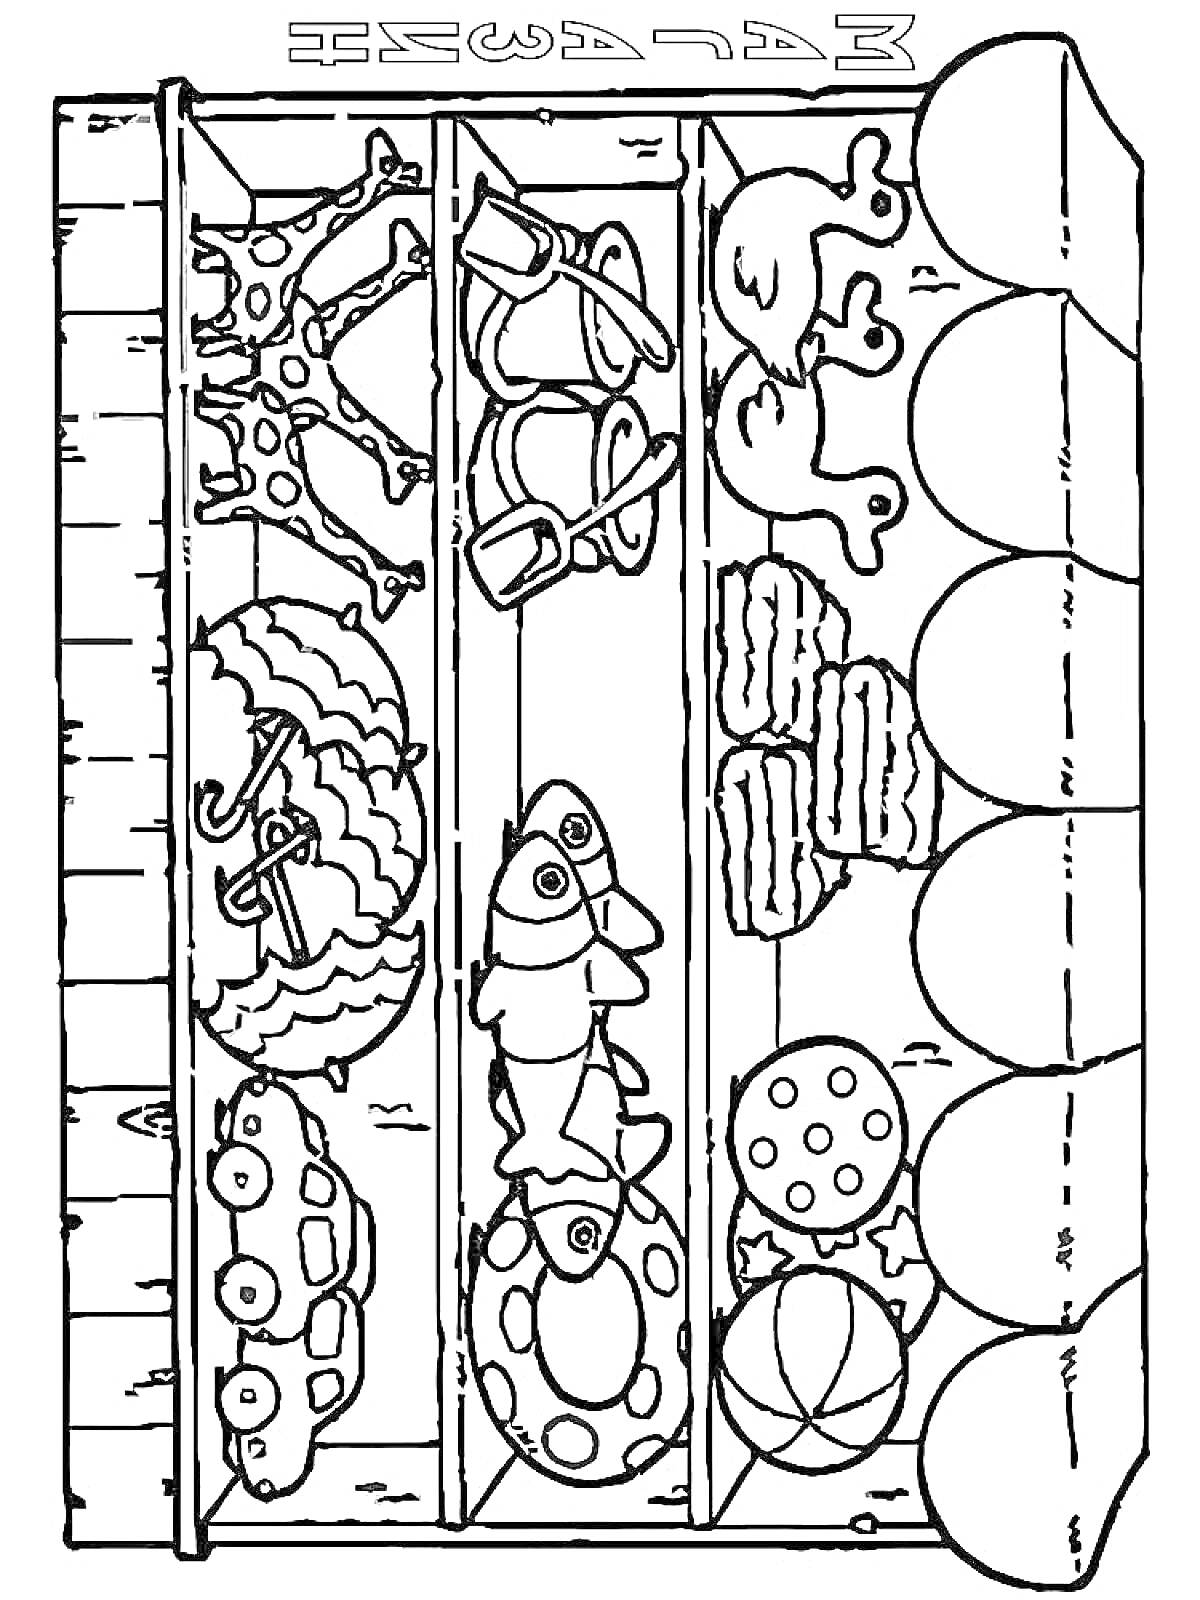 Раскраска Игрушки на полках: куклы с бантиками, плюшевые медведи, лягушки, пираты, машинка с колесами, рыба, мячи